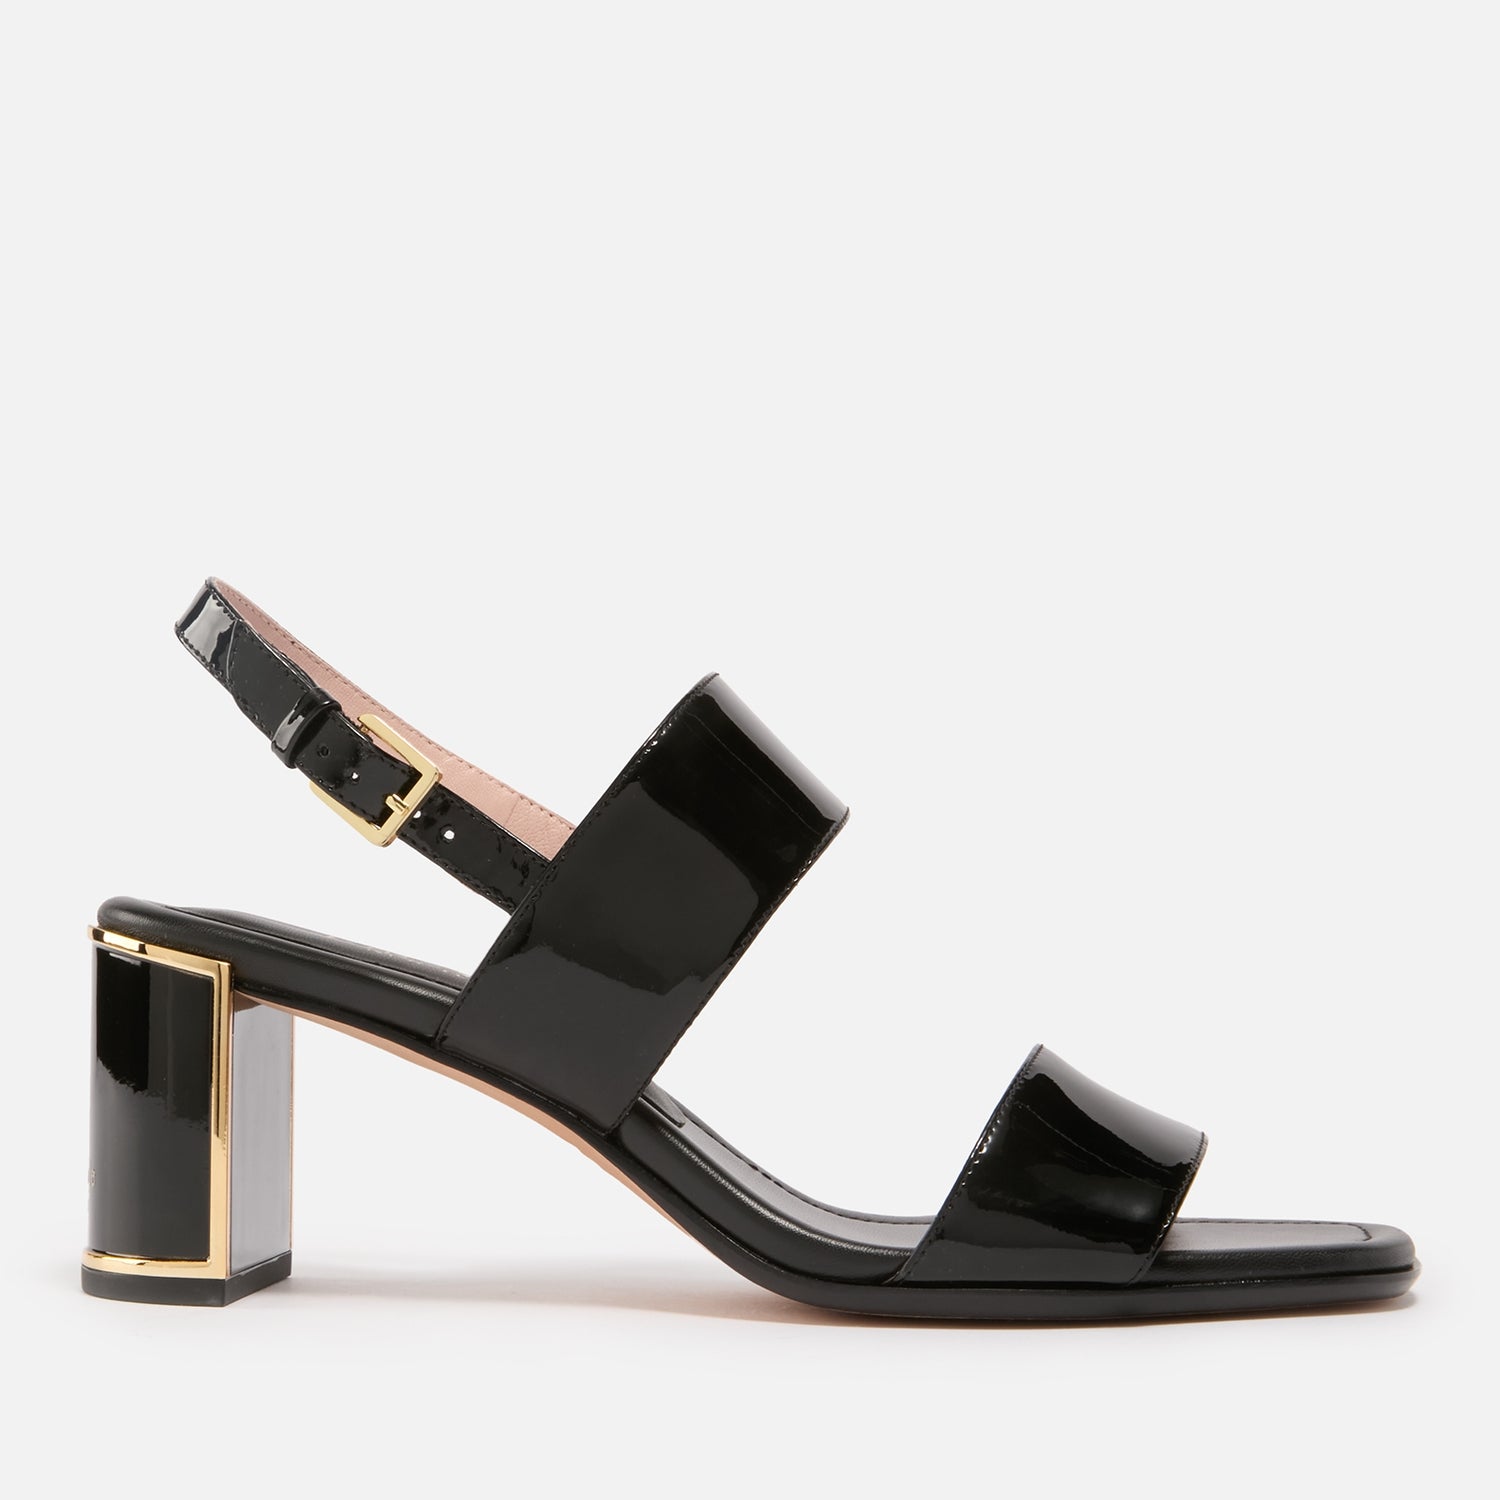 Kate Spade New York Women's Merritt Patent Leather Heeled Sandals - UK 7